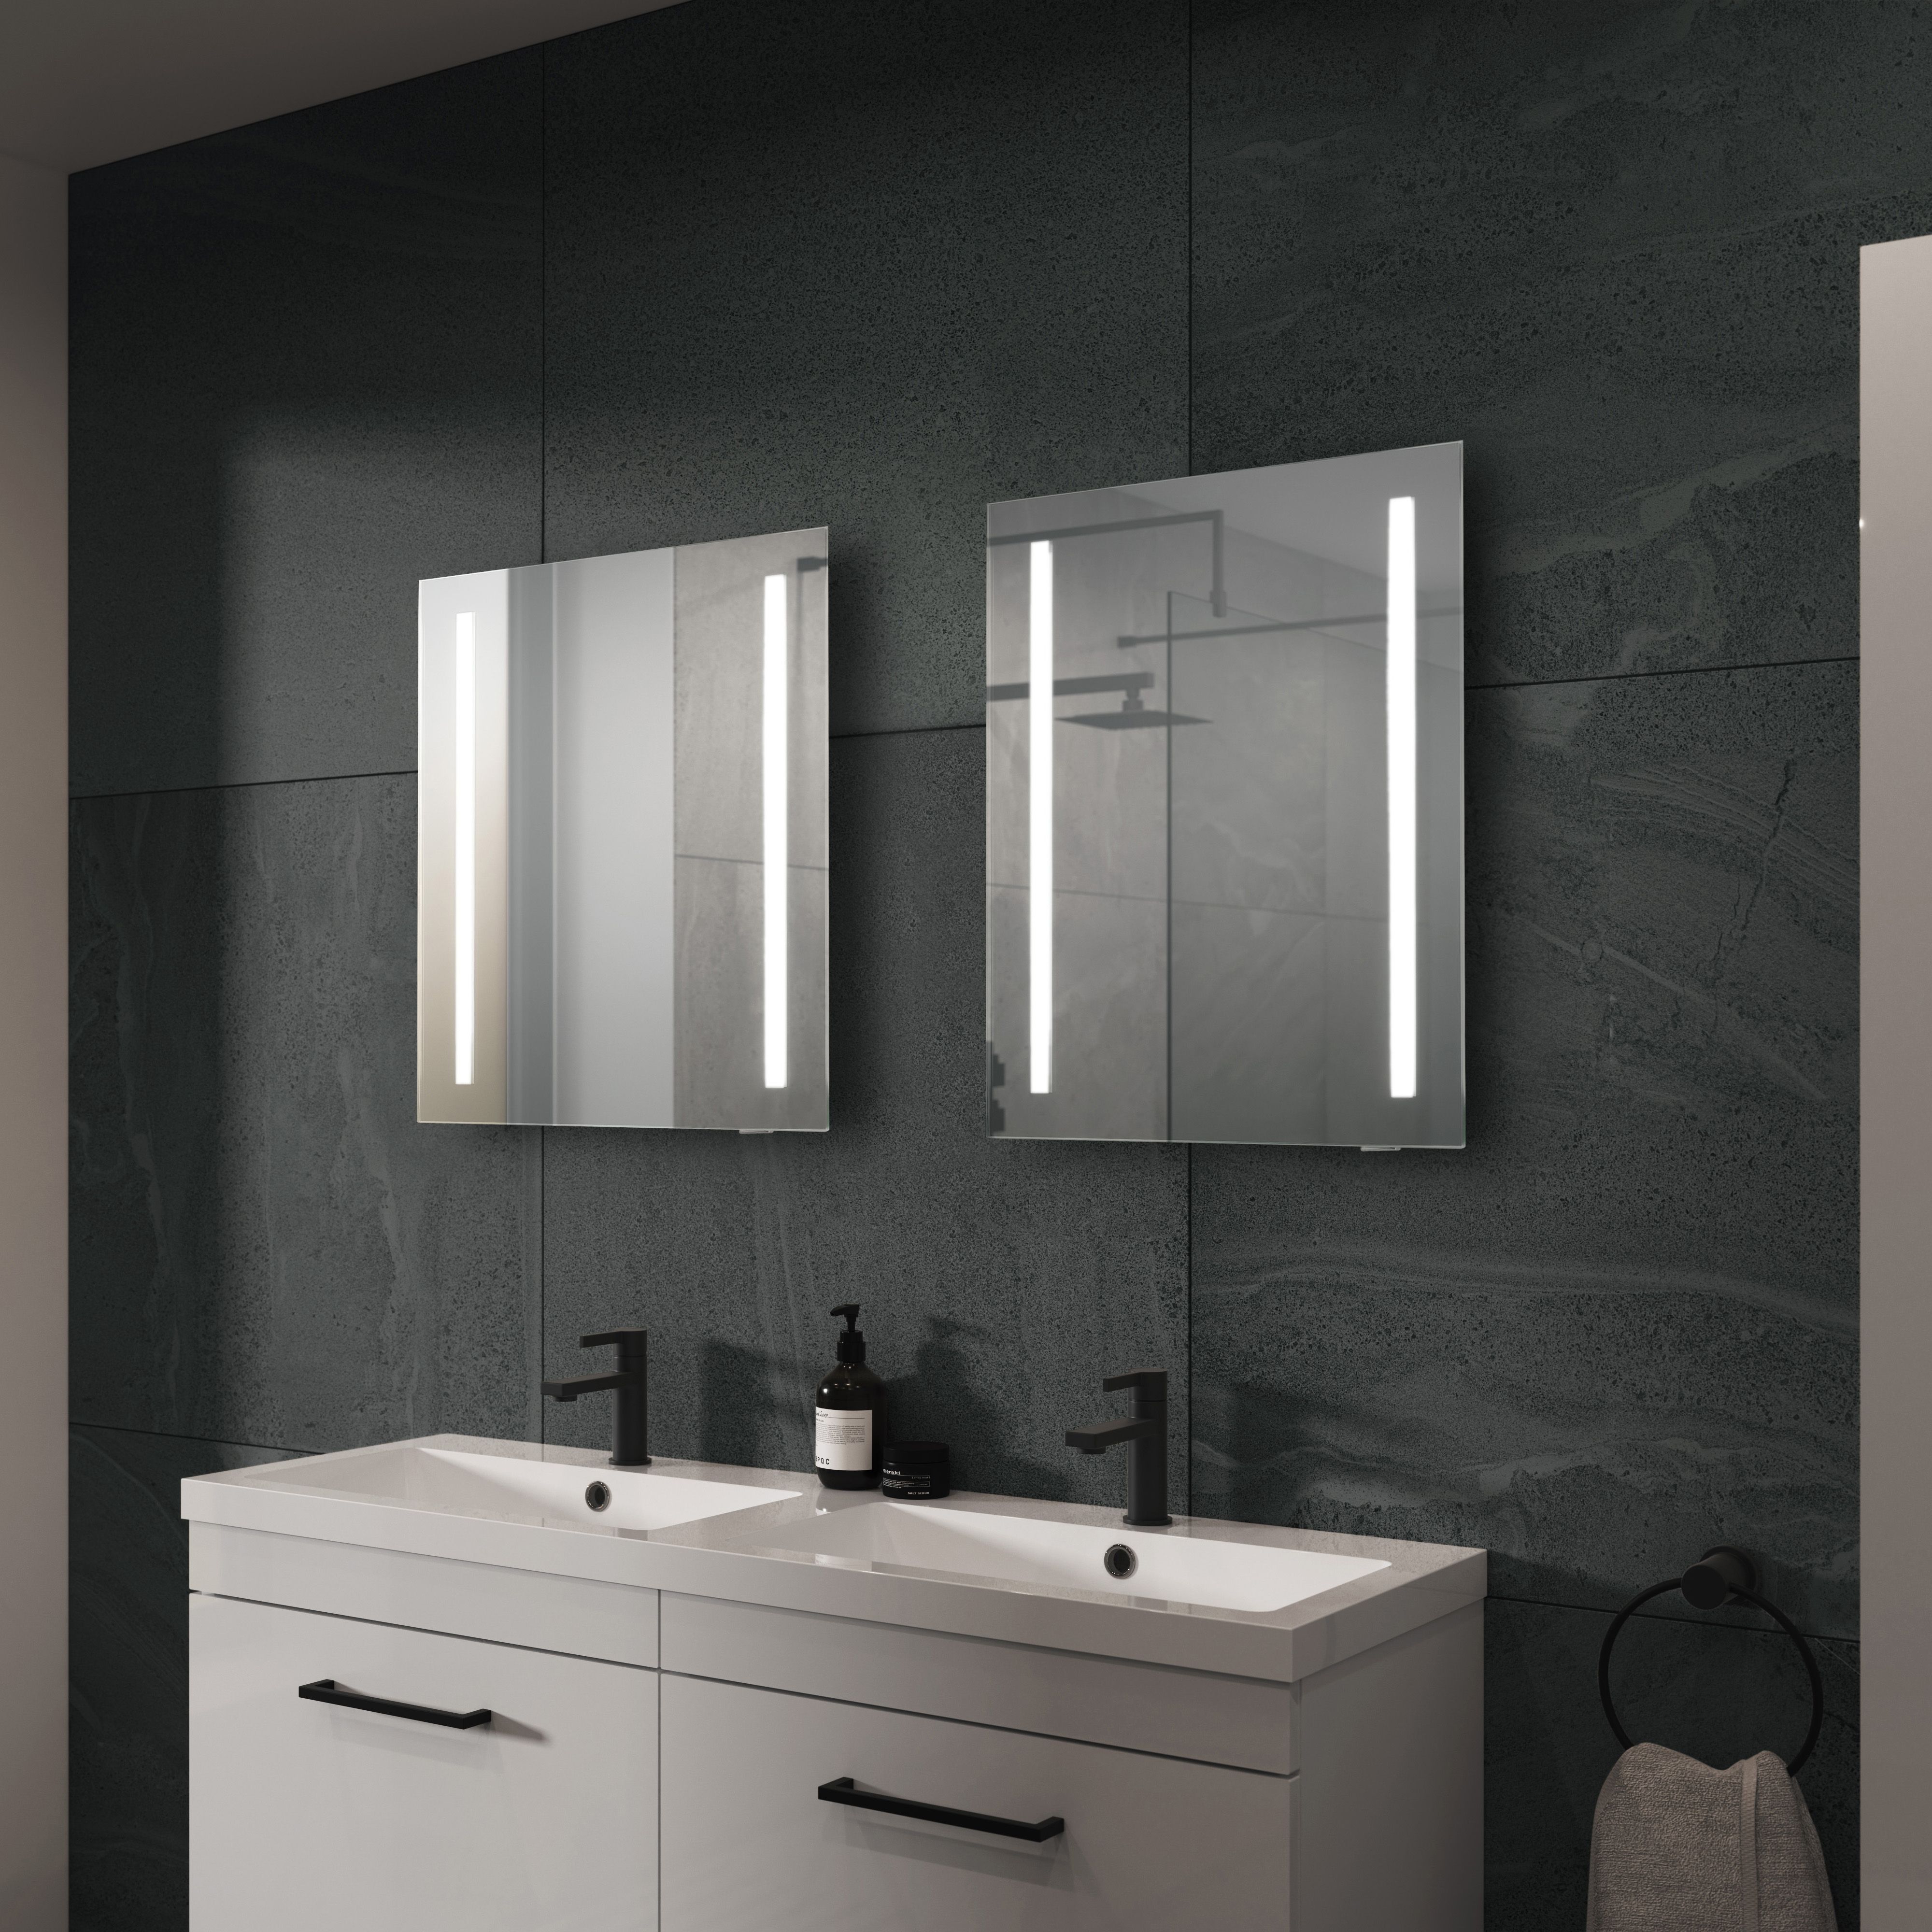 Sensio Fern Non-Illuminated Bathroom Mirror Brass 600 x 400mm